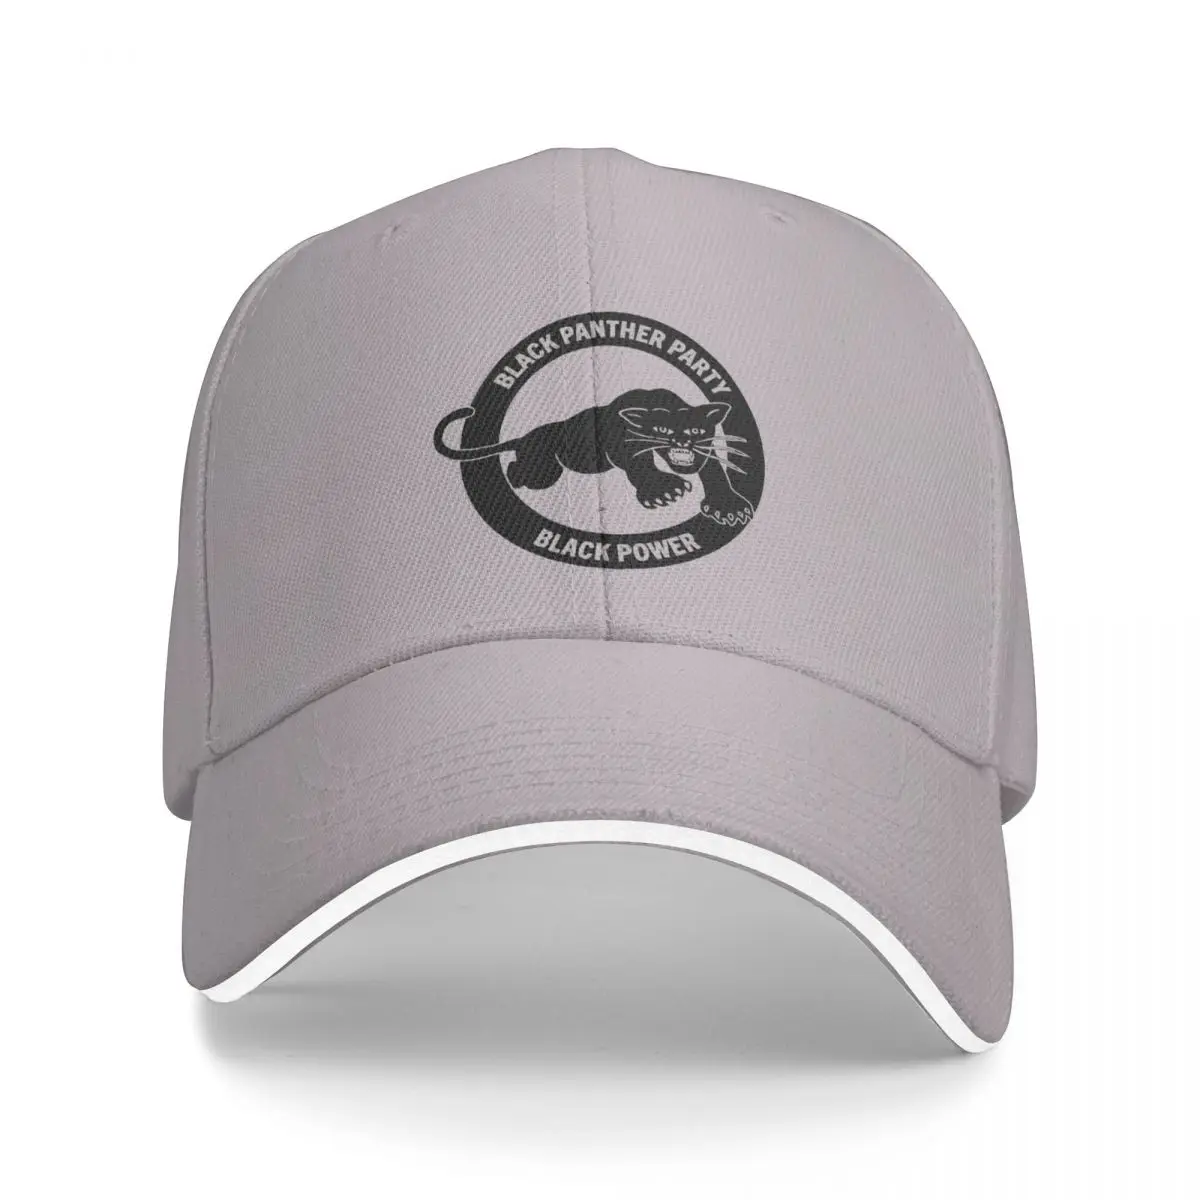 

New Black Pan-ther Party Black Power Cap Baseball Cap hat luxury brand dropshipping women's hats Men's